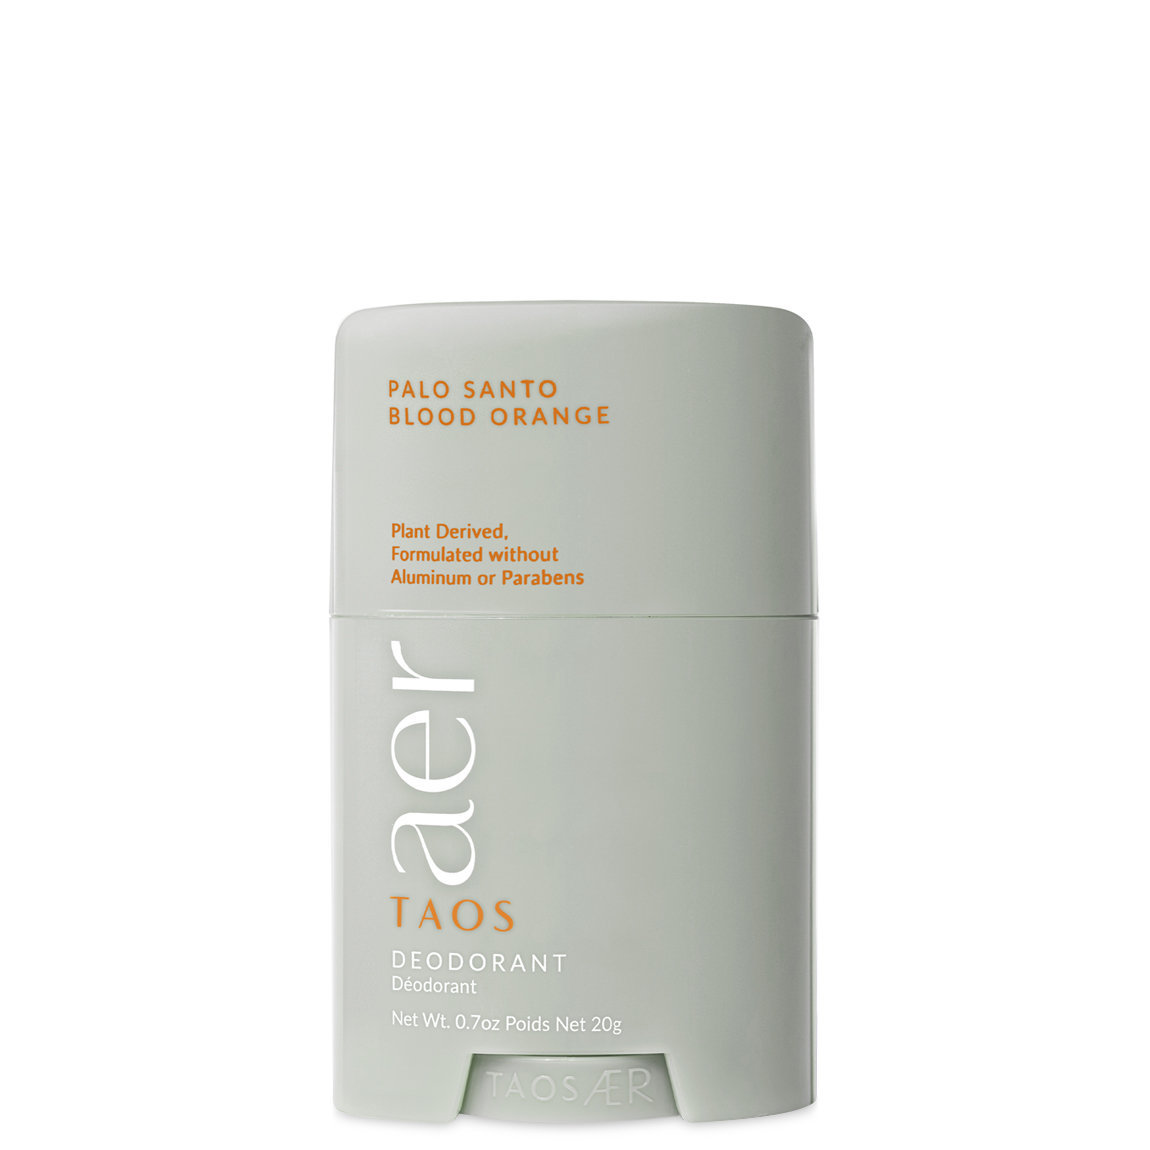 Taos AER Next-Level Clean Deodorant: Palo Santo Blood Orange 0.7 oz alternative view 1 - product swatch.